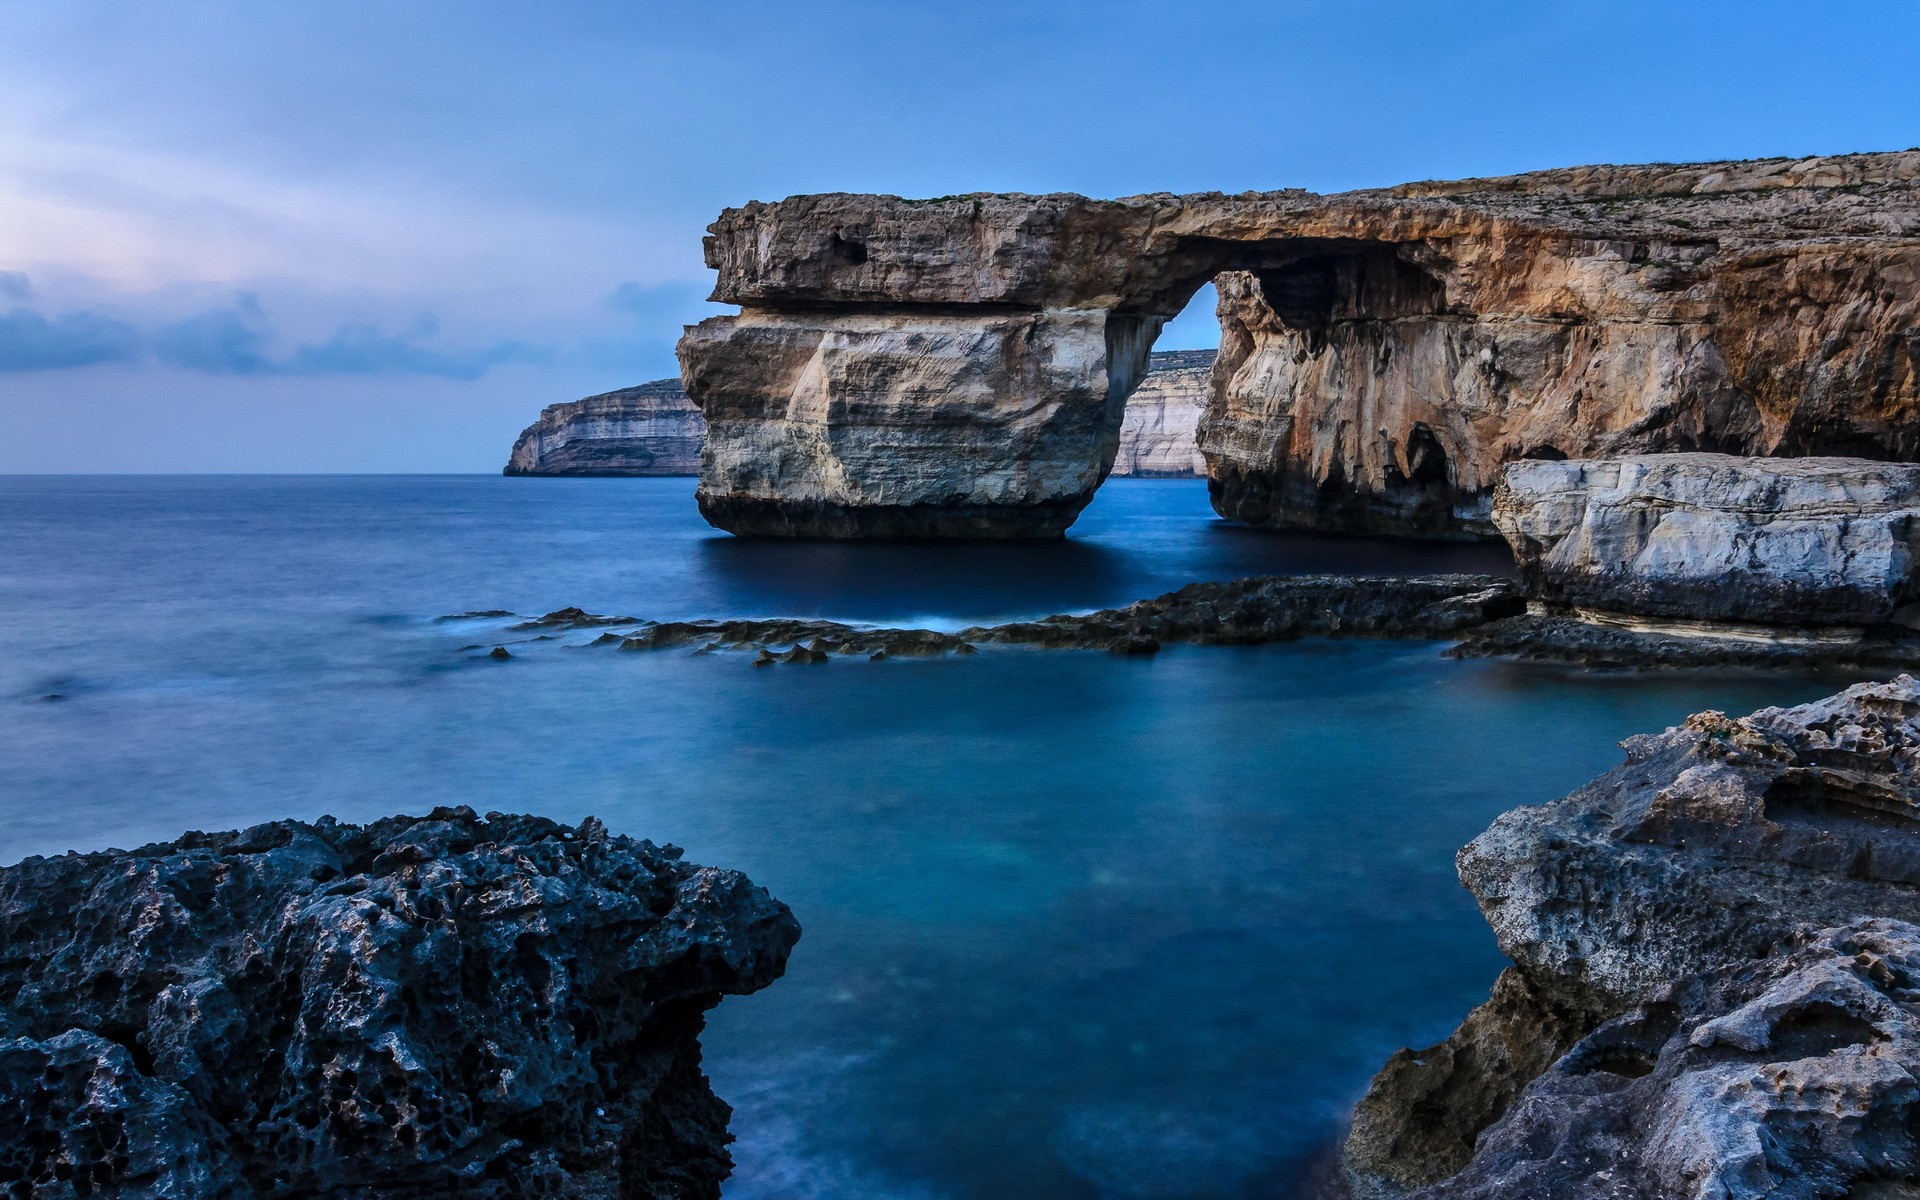 Malta Rock Sea Coast Wallpapers Hd Desktop And Mobile Backgrounds